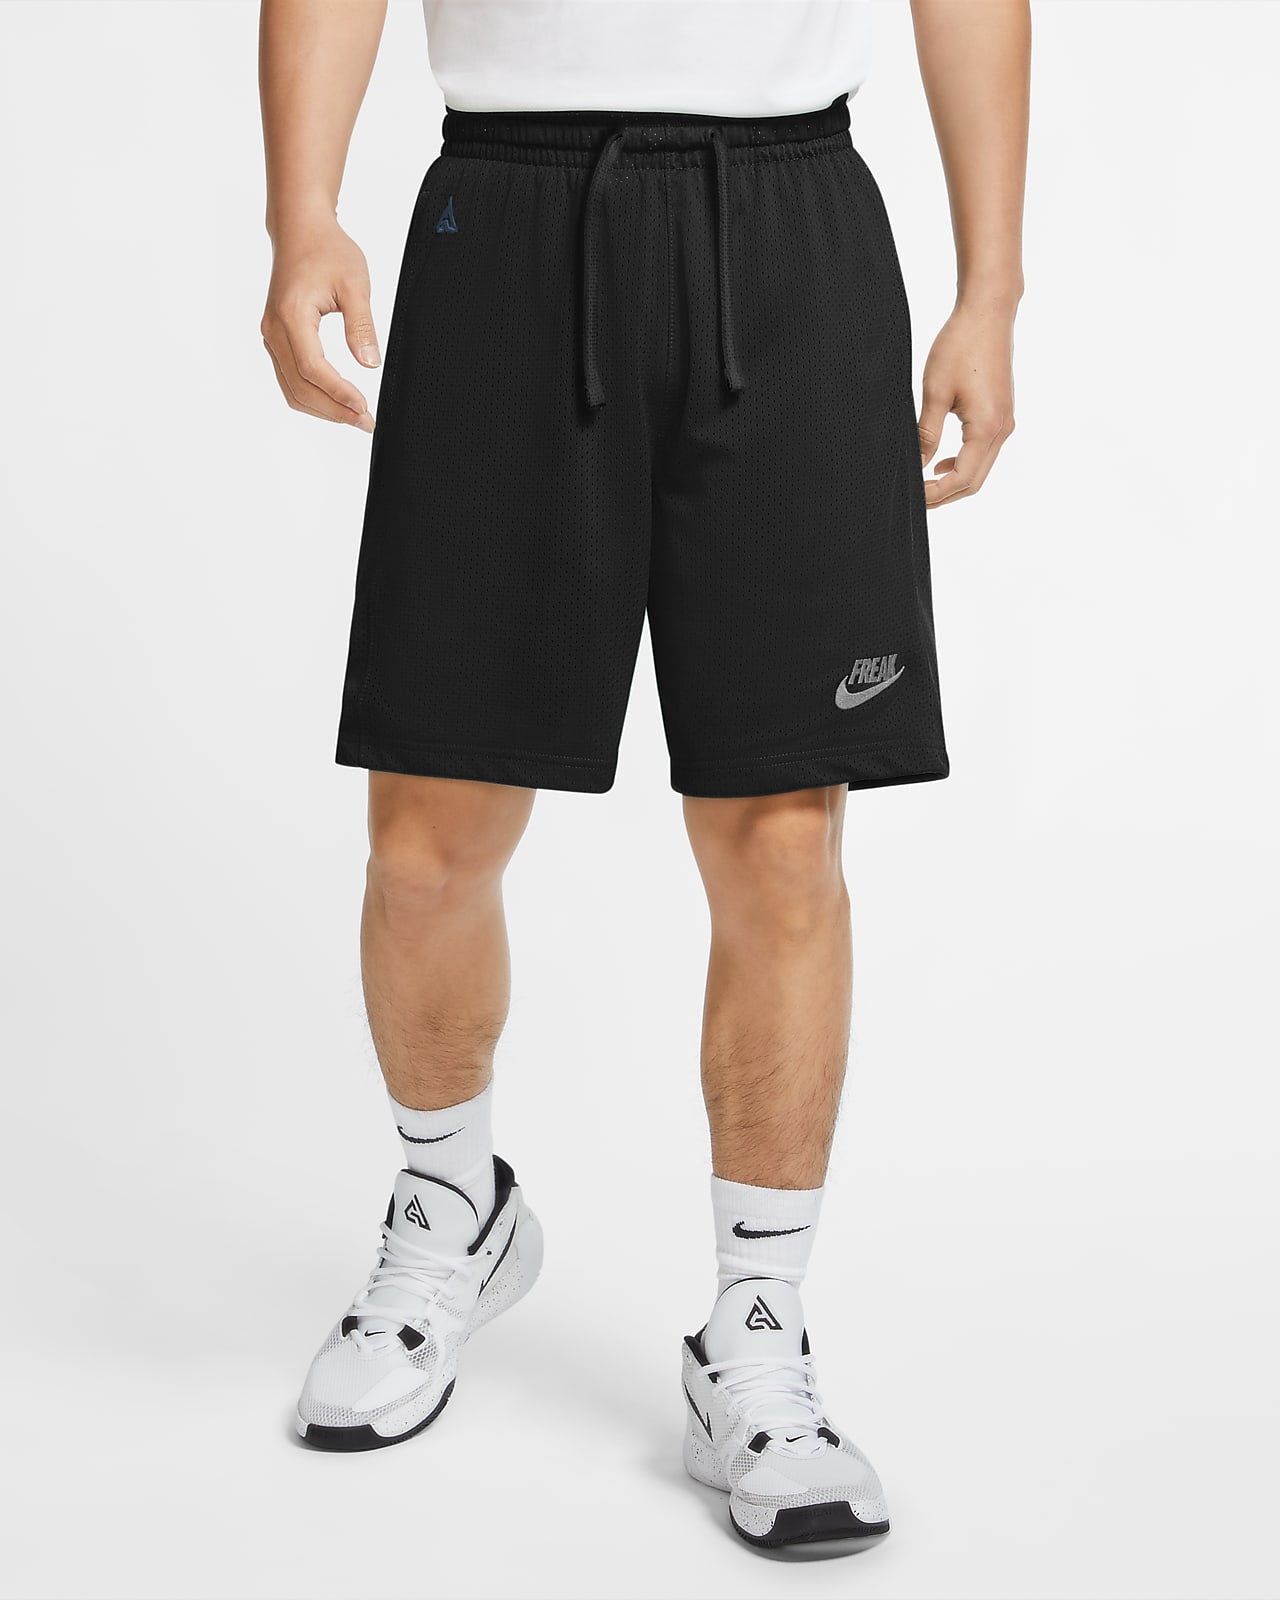 nike men's logo shorts